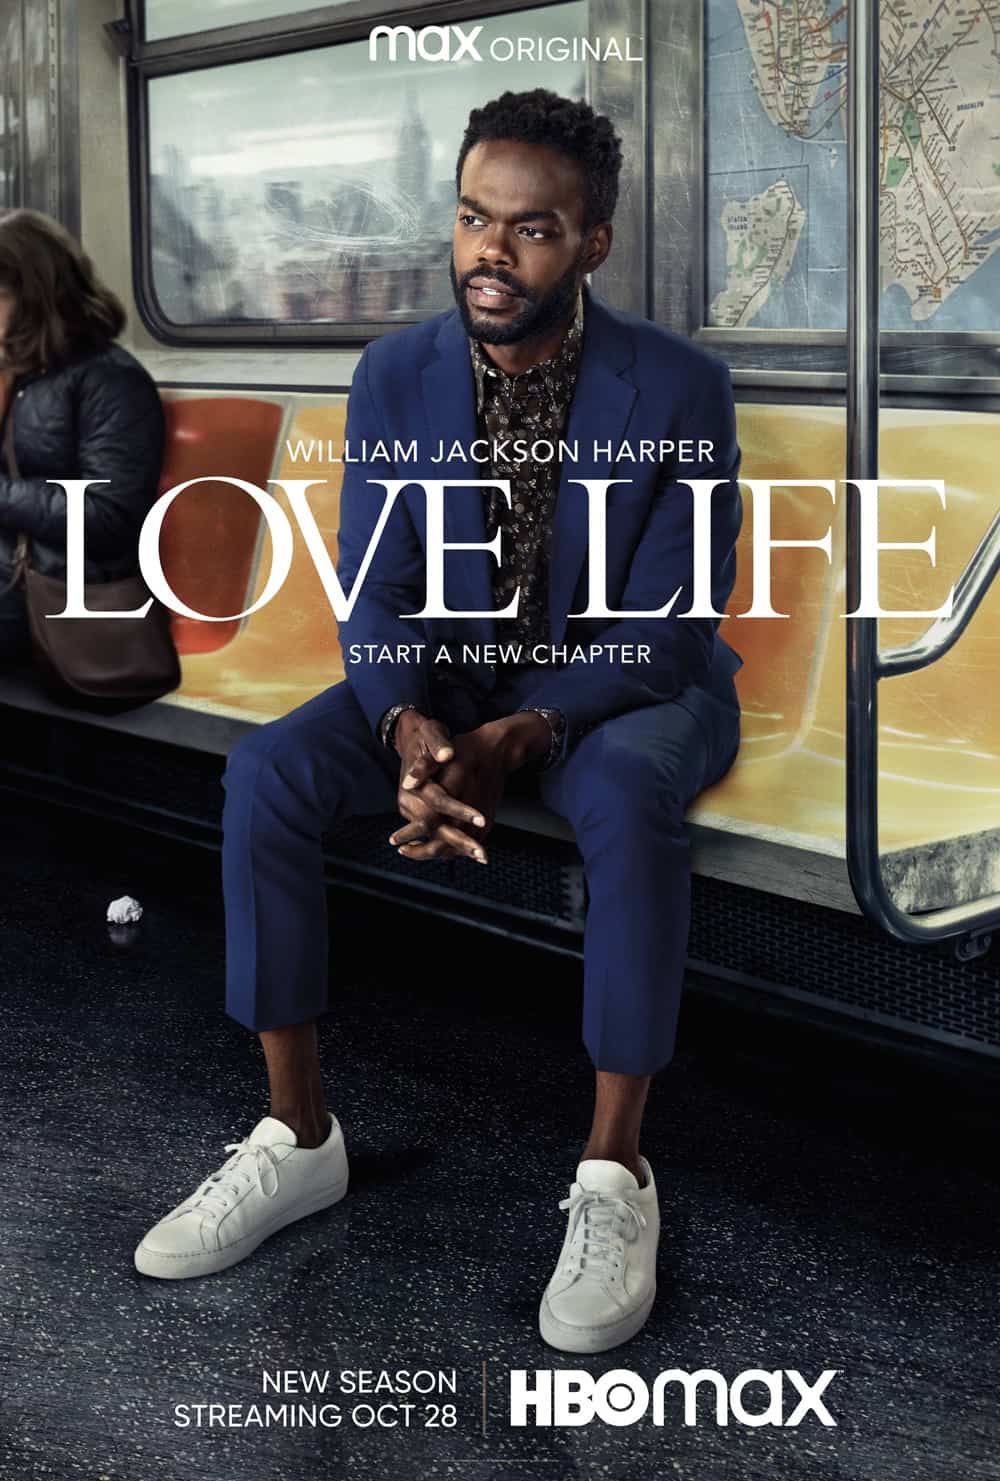 Is Love Life Season 2 on HBO Max